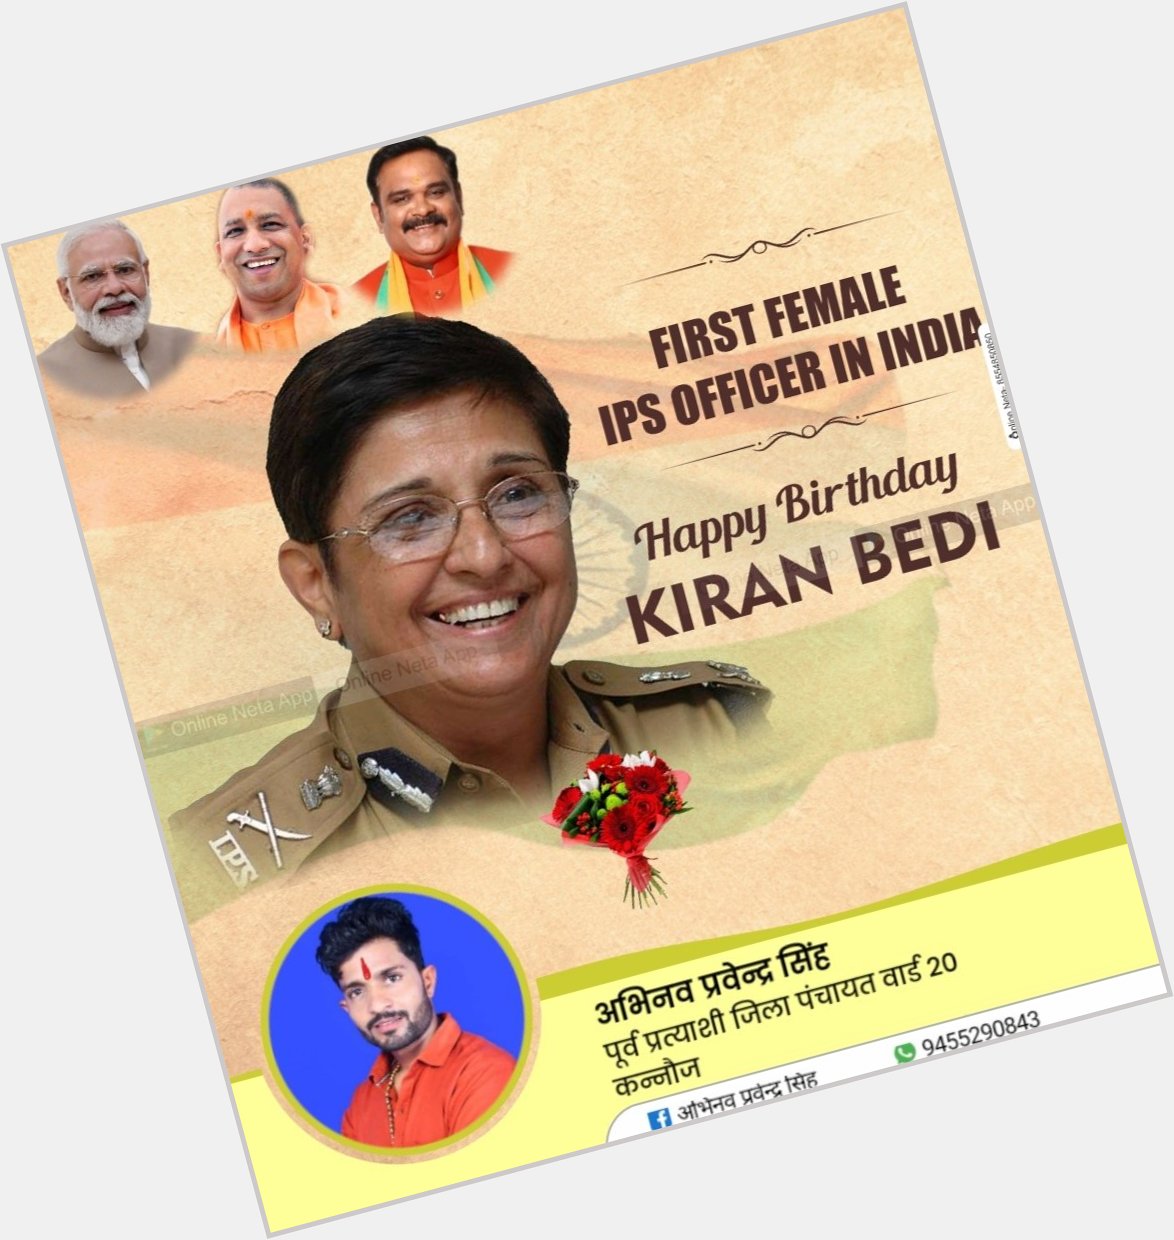 First female IPS officer in India Kiran bedi ji Happy birthday         